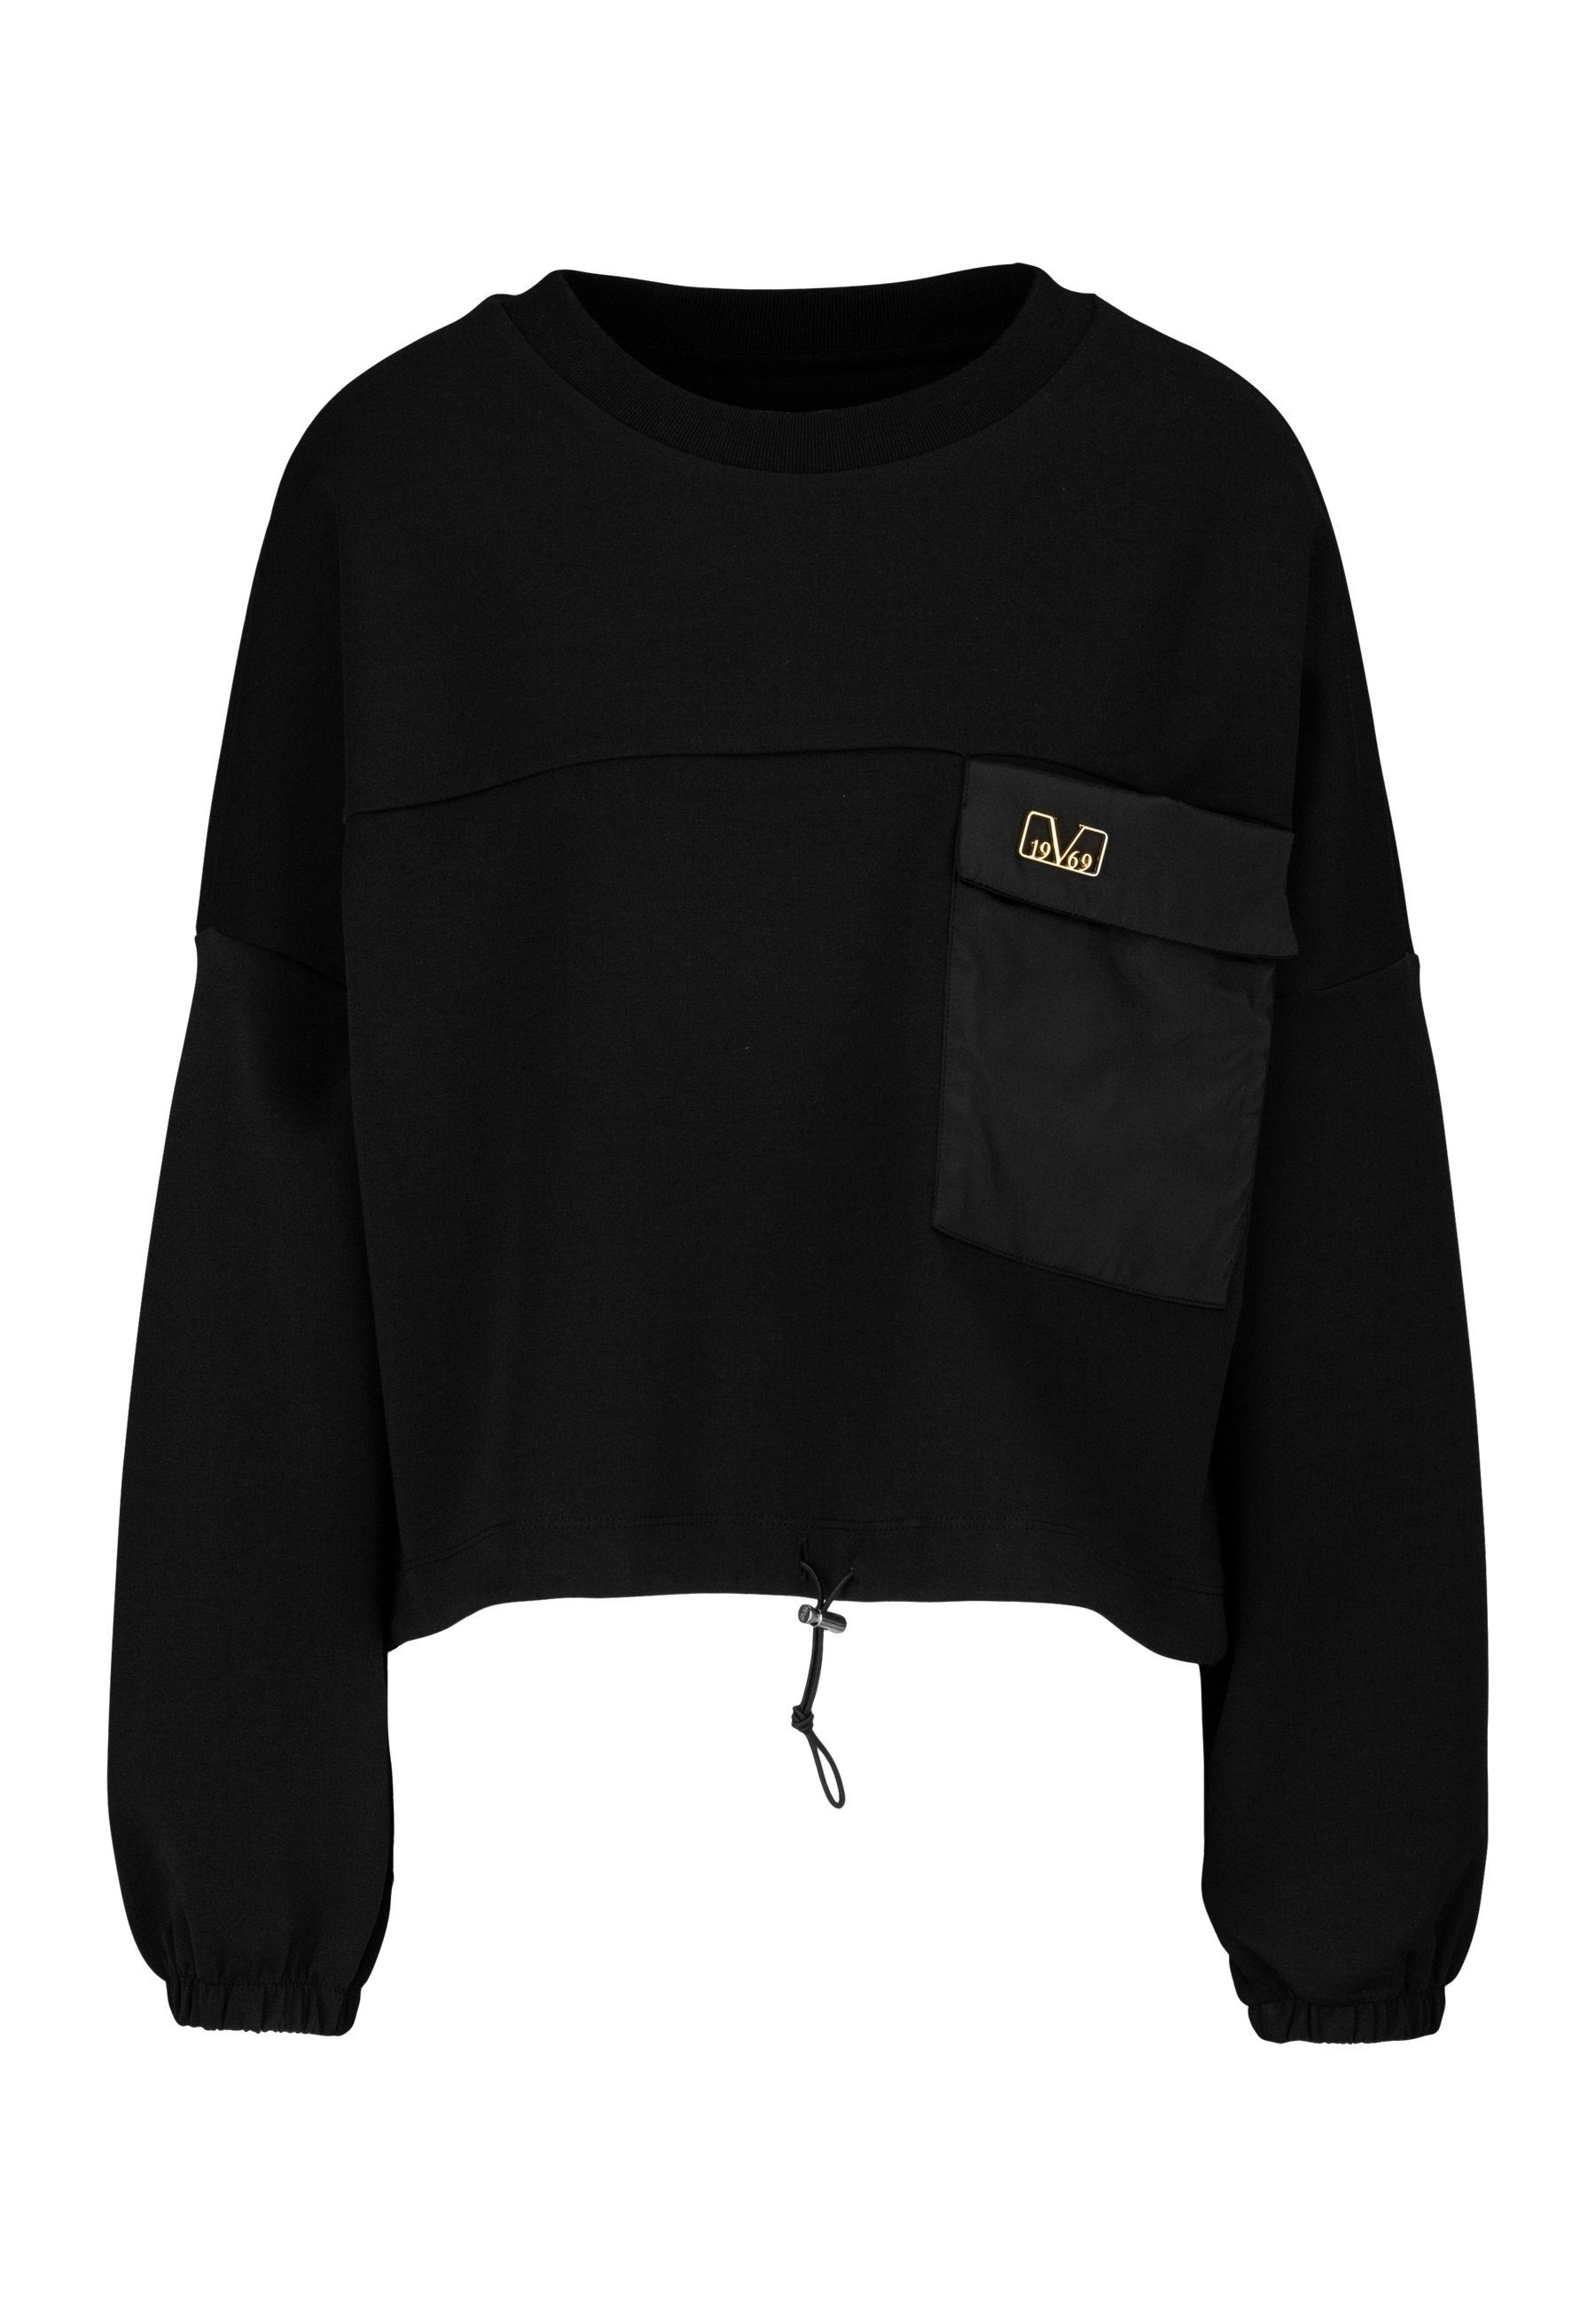 Sweatshirt Tasche Italia Versace Pullover by Sweatshirt mit ITALIA 19V69